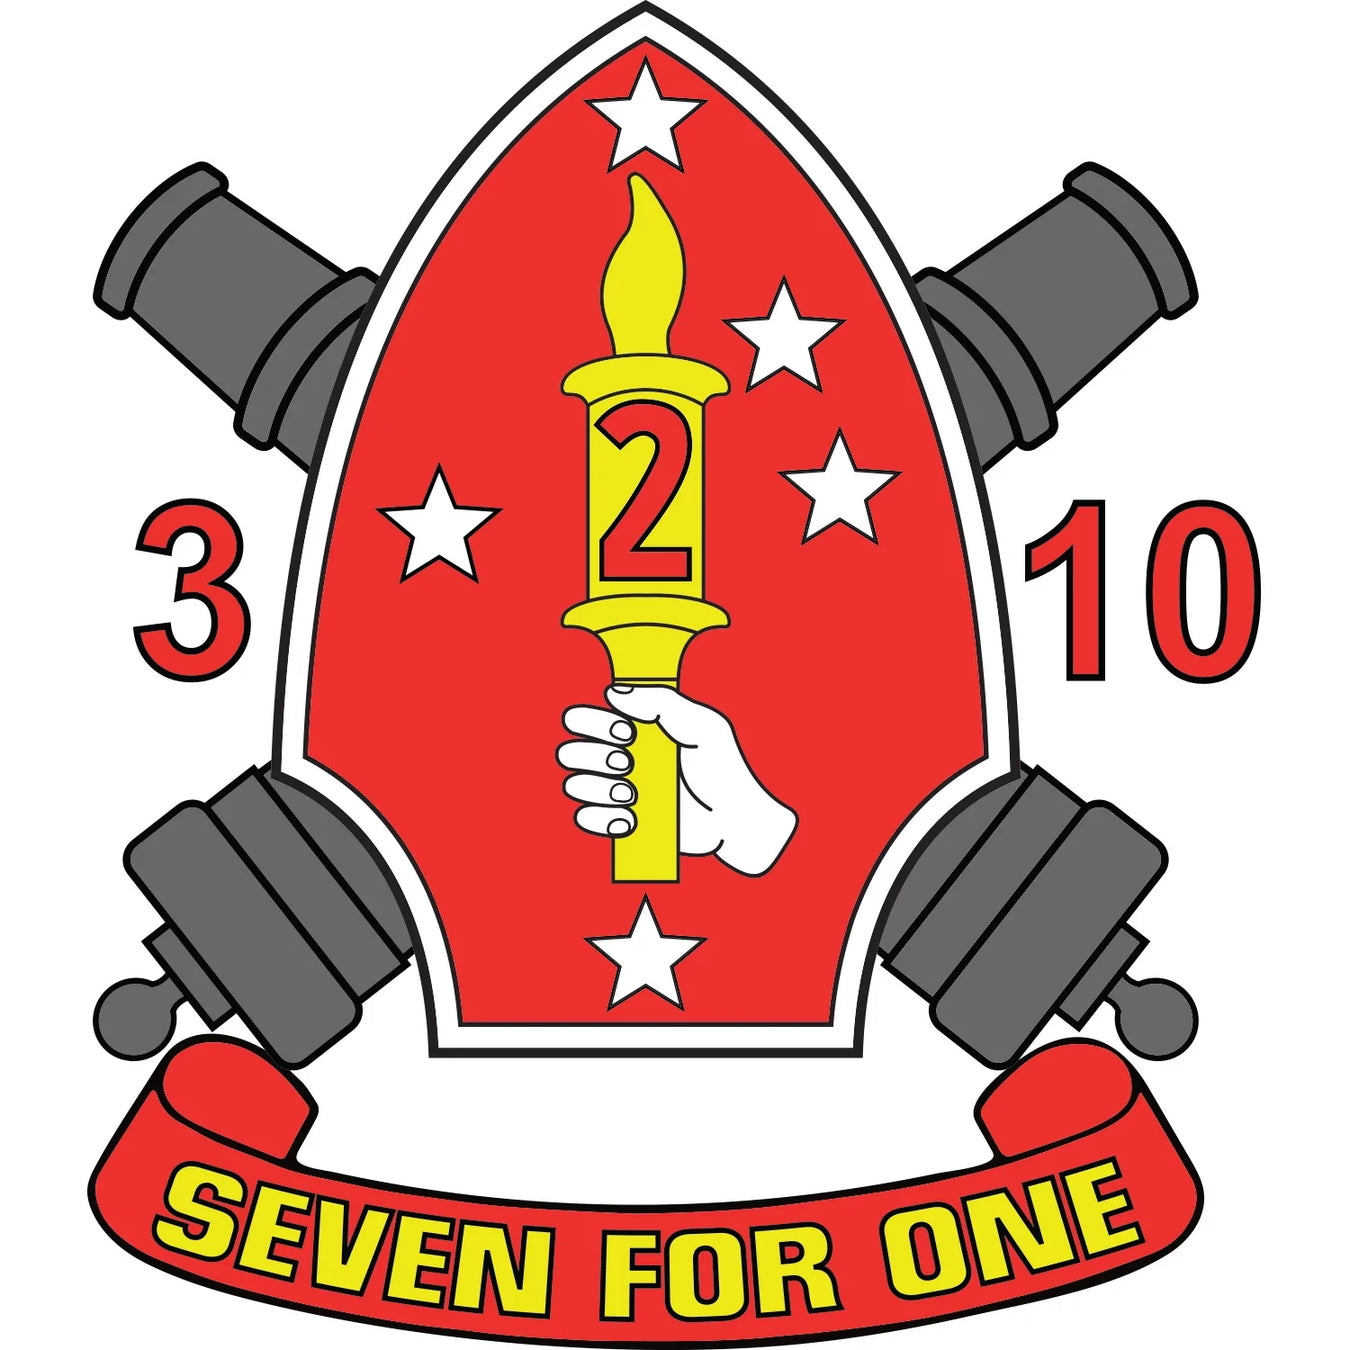 3rd Battalion, 10th Marines